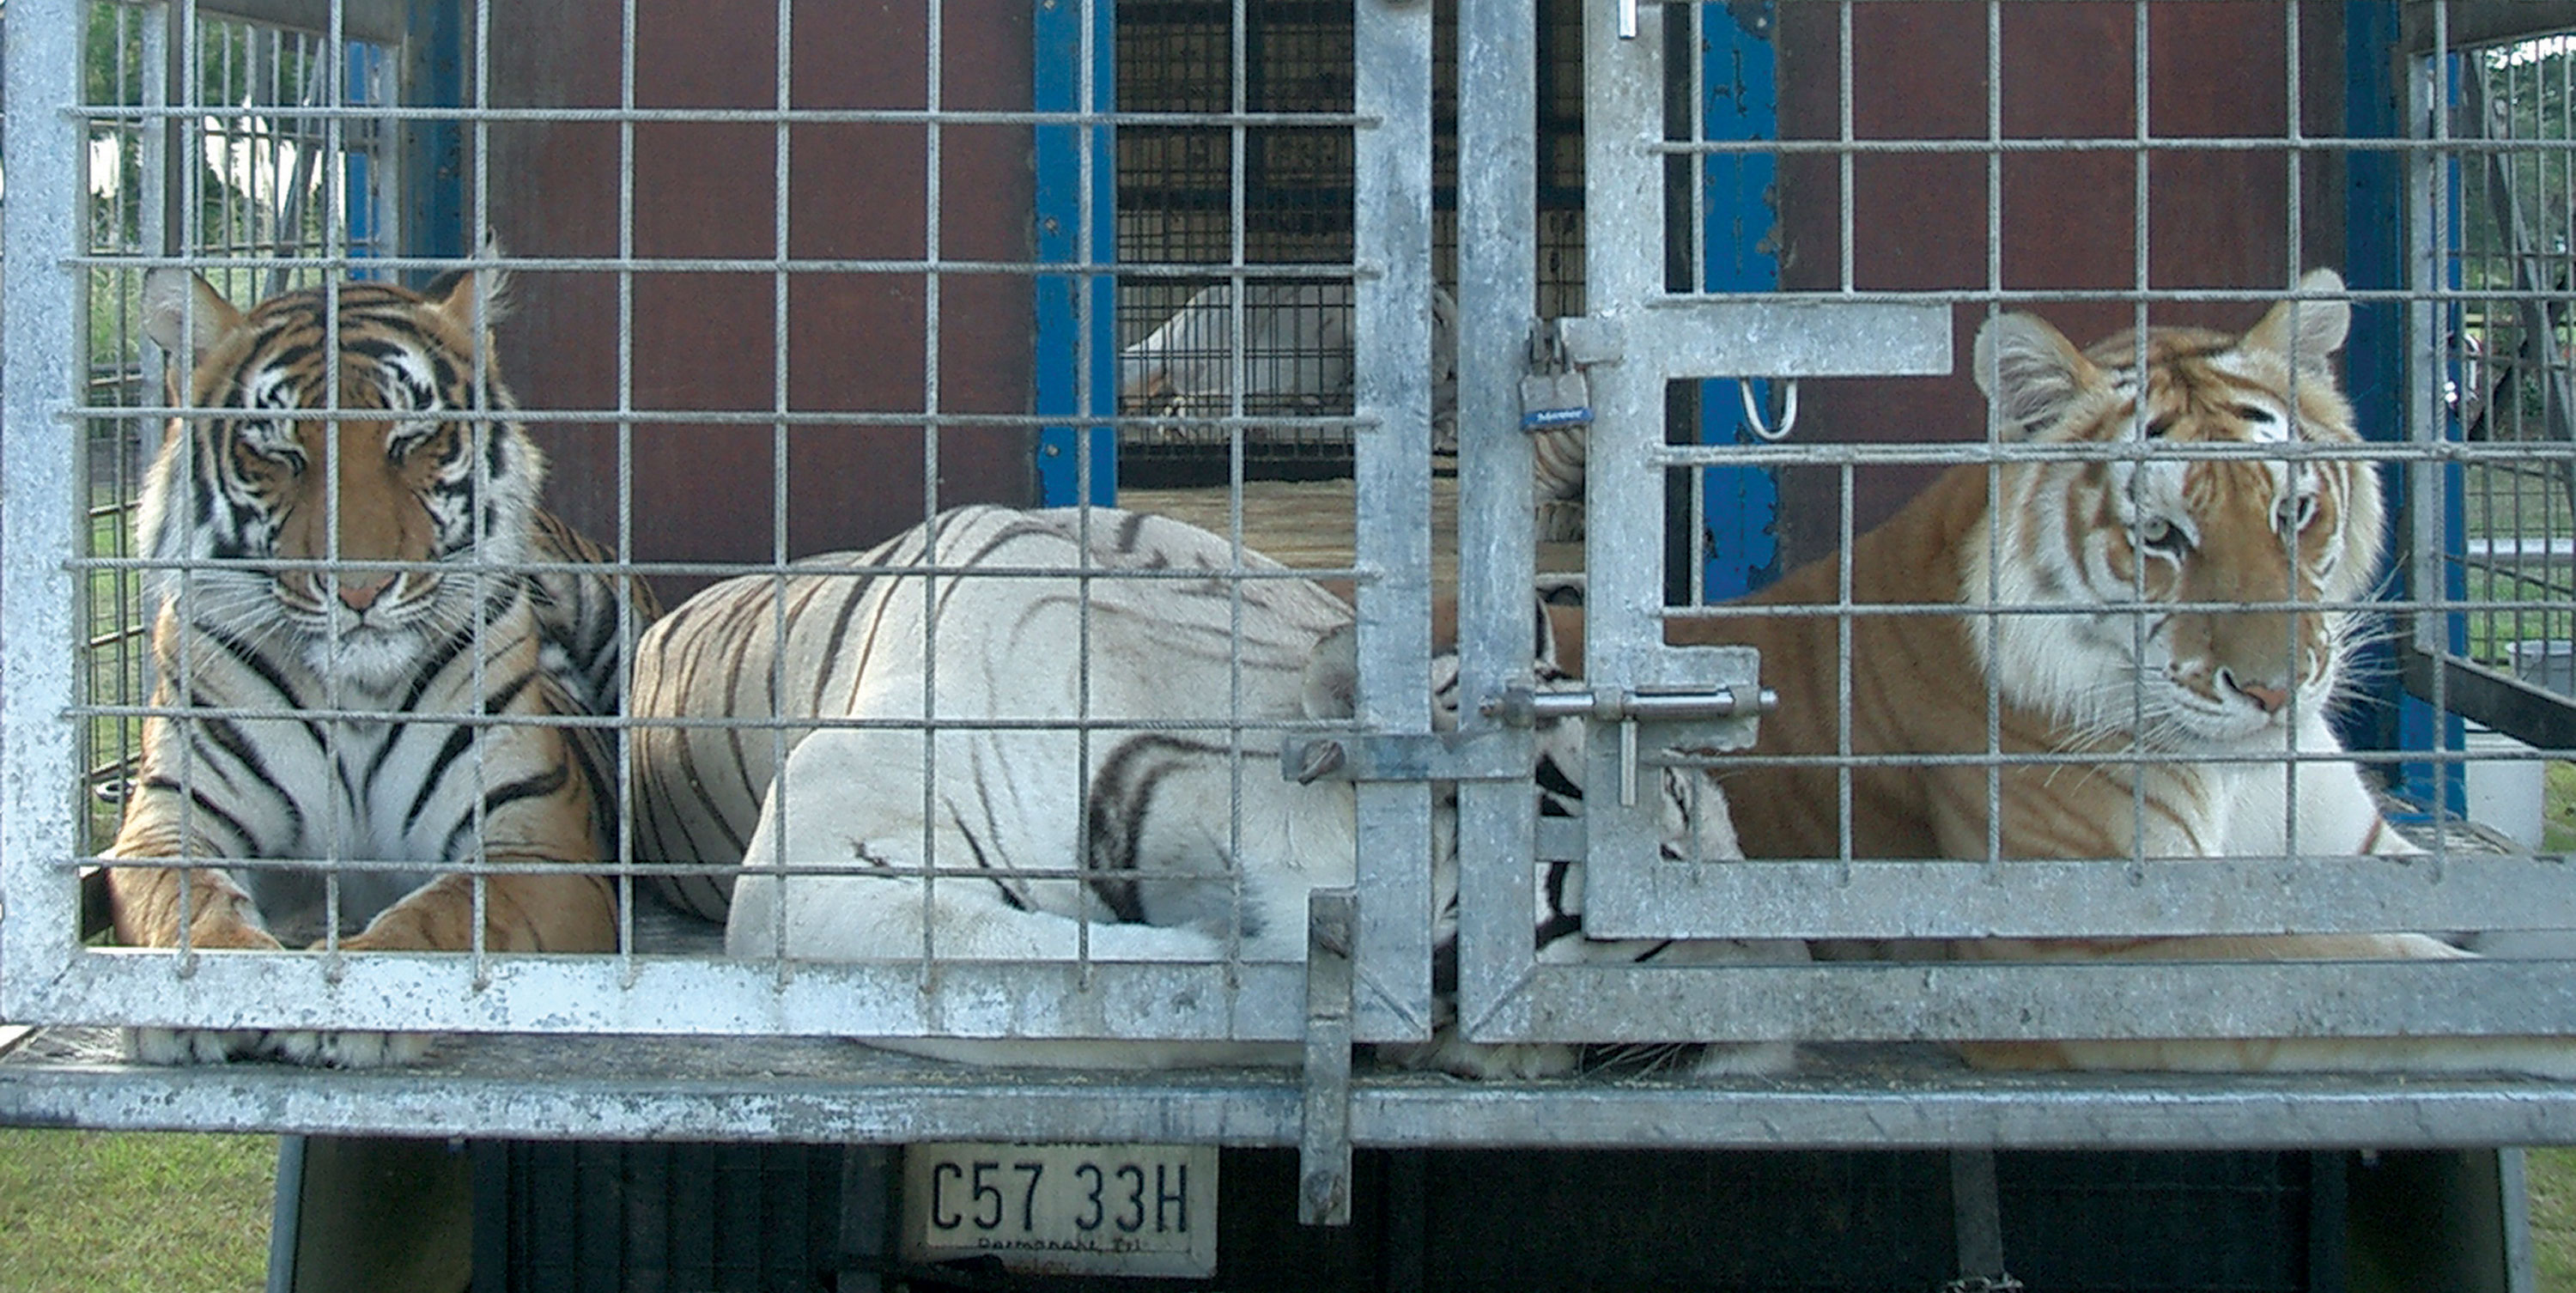 circus animals cruelty